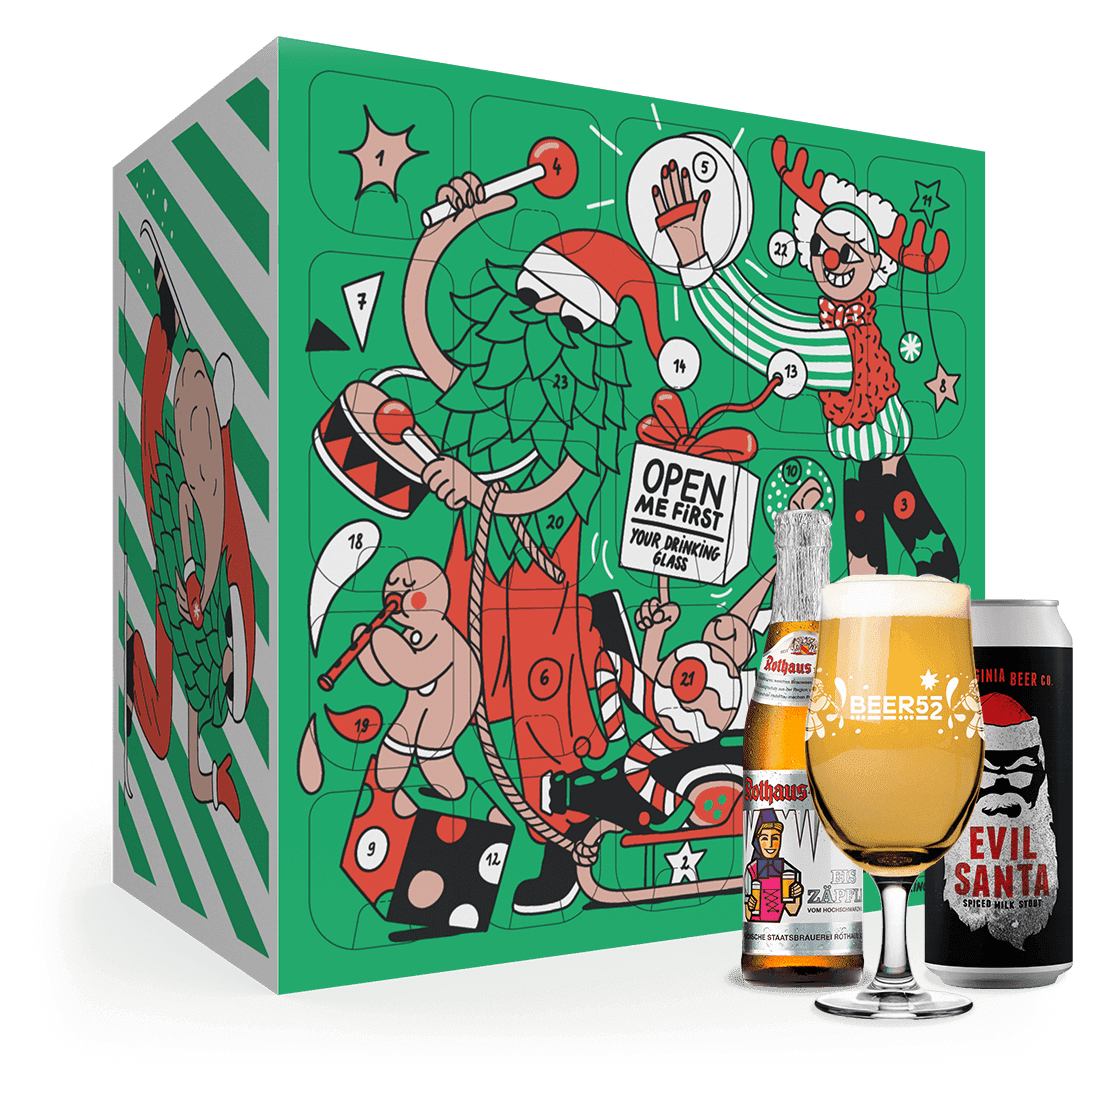 Beer52 beer advent calendar christmas.co.uk All Things Christmas